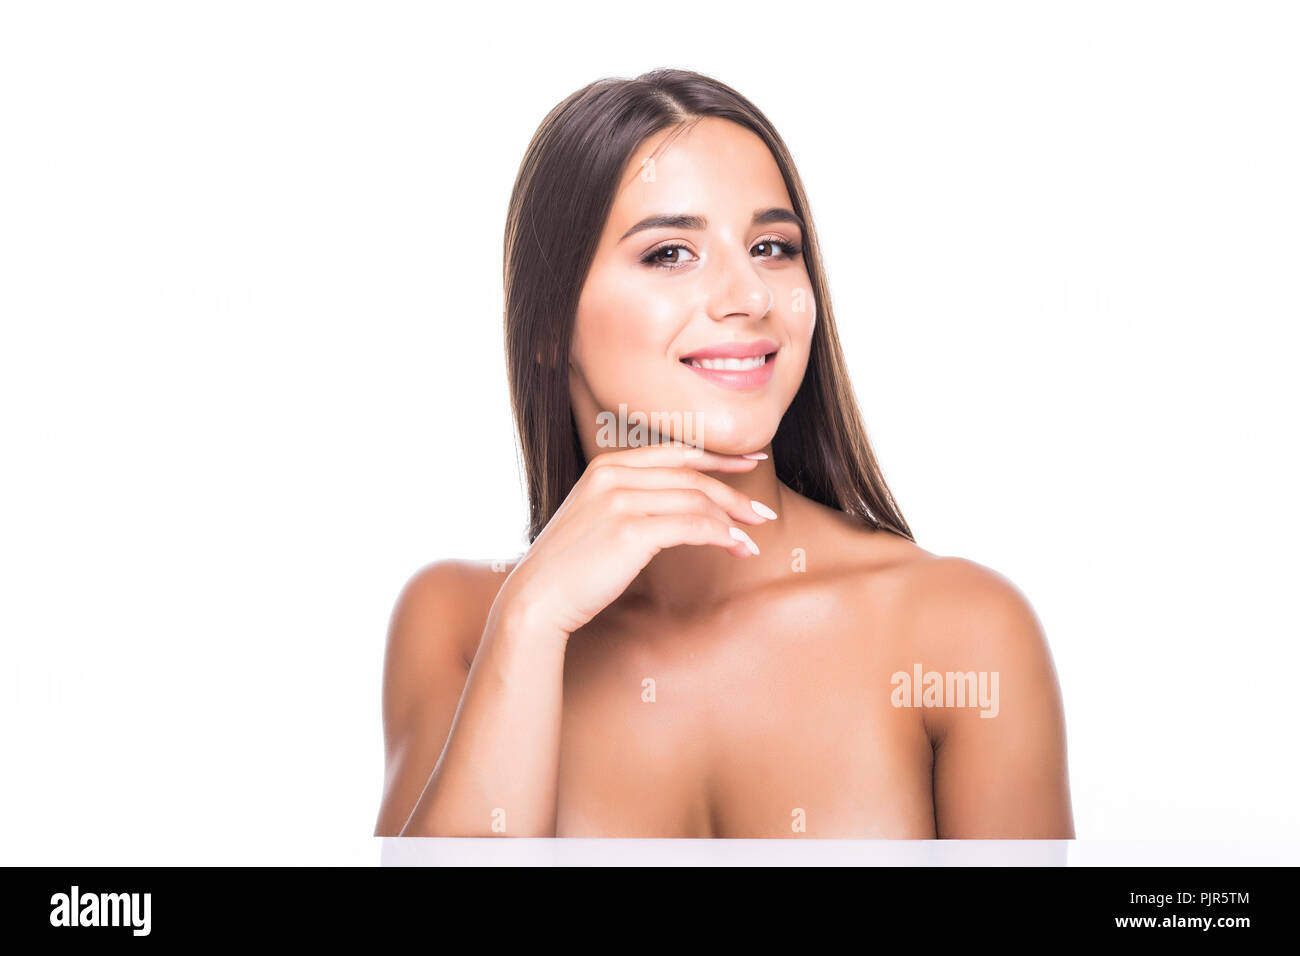 Hot naked women closeups - Naked photo